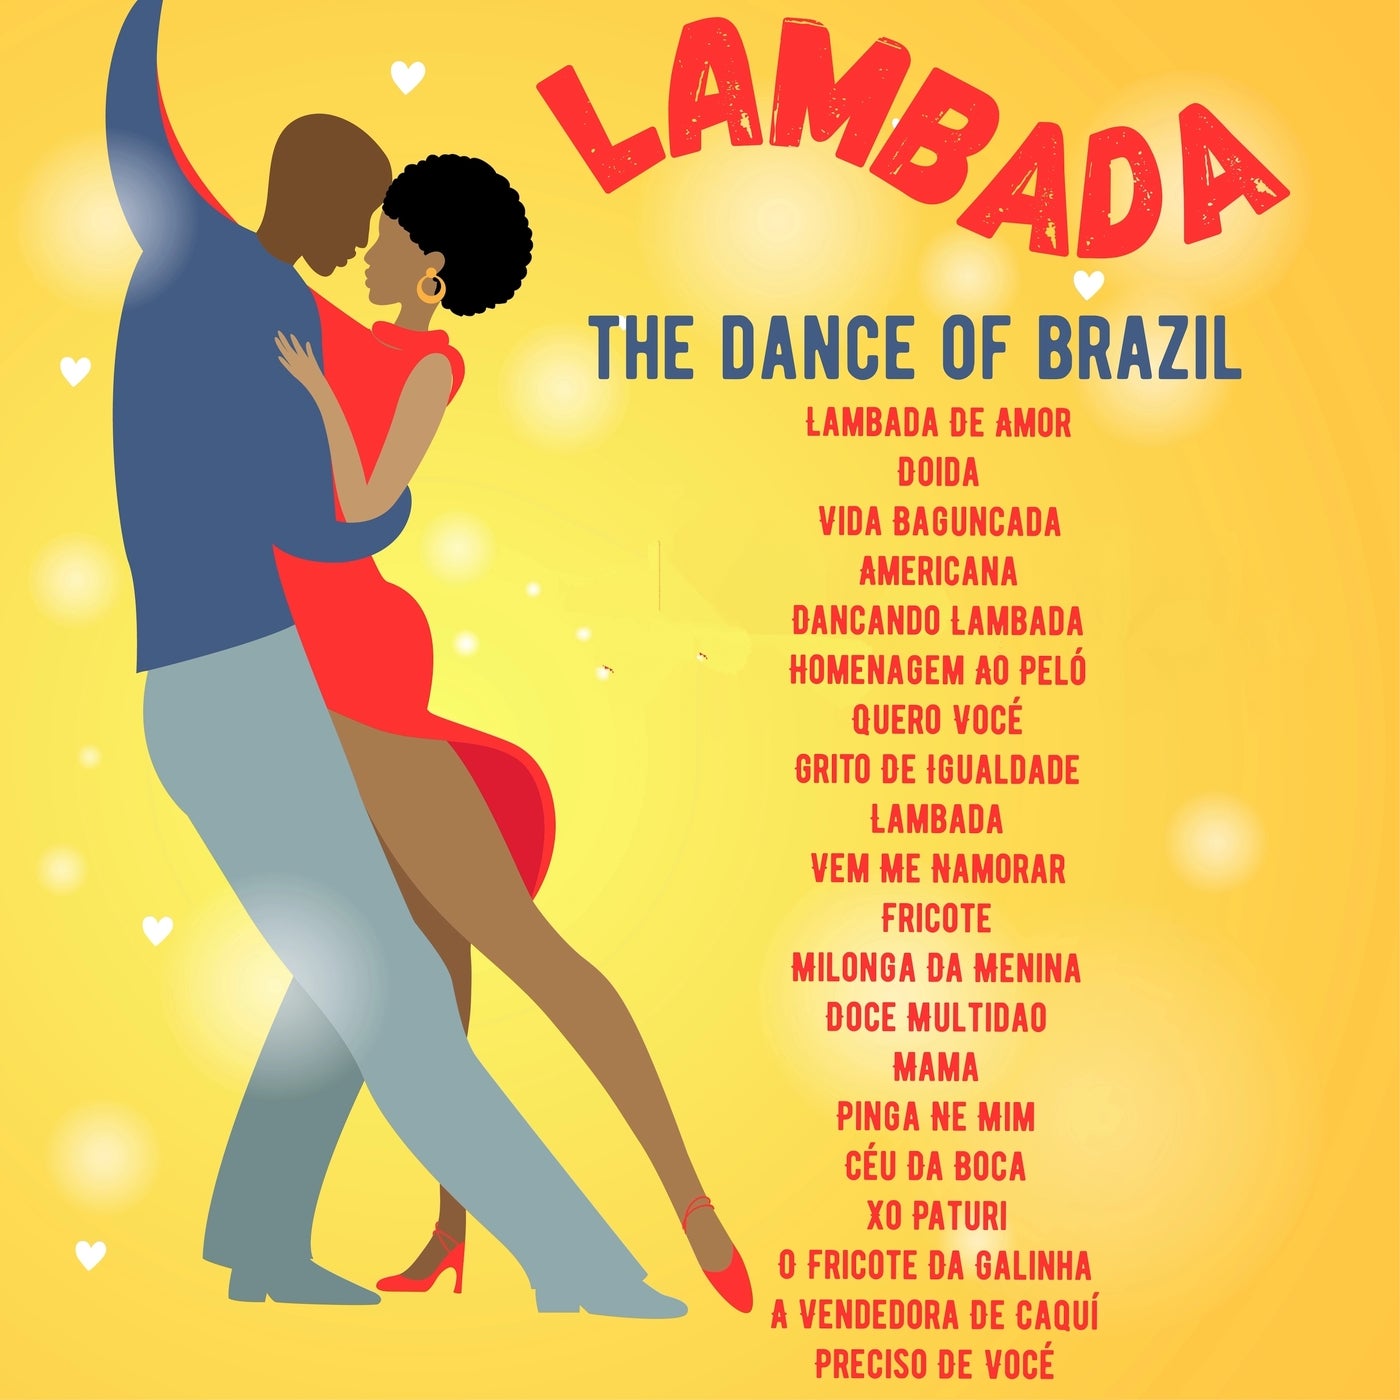 Lambada: The Dance of Brazil by Grupo Super Bailongo, CDM Project